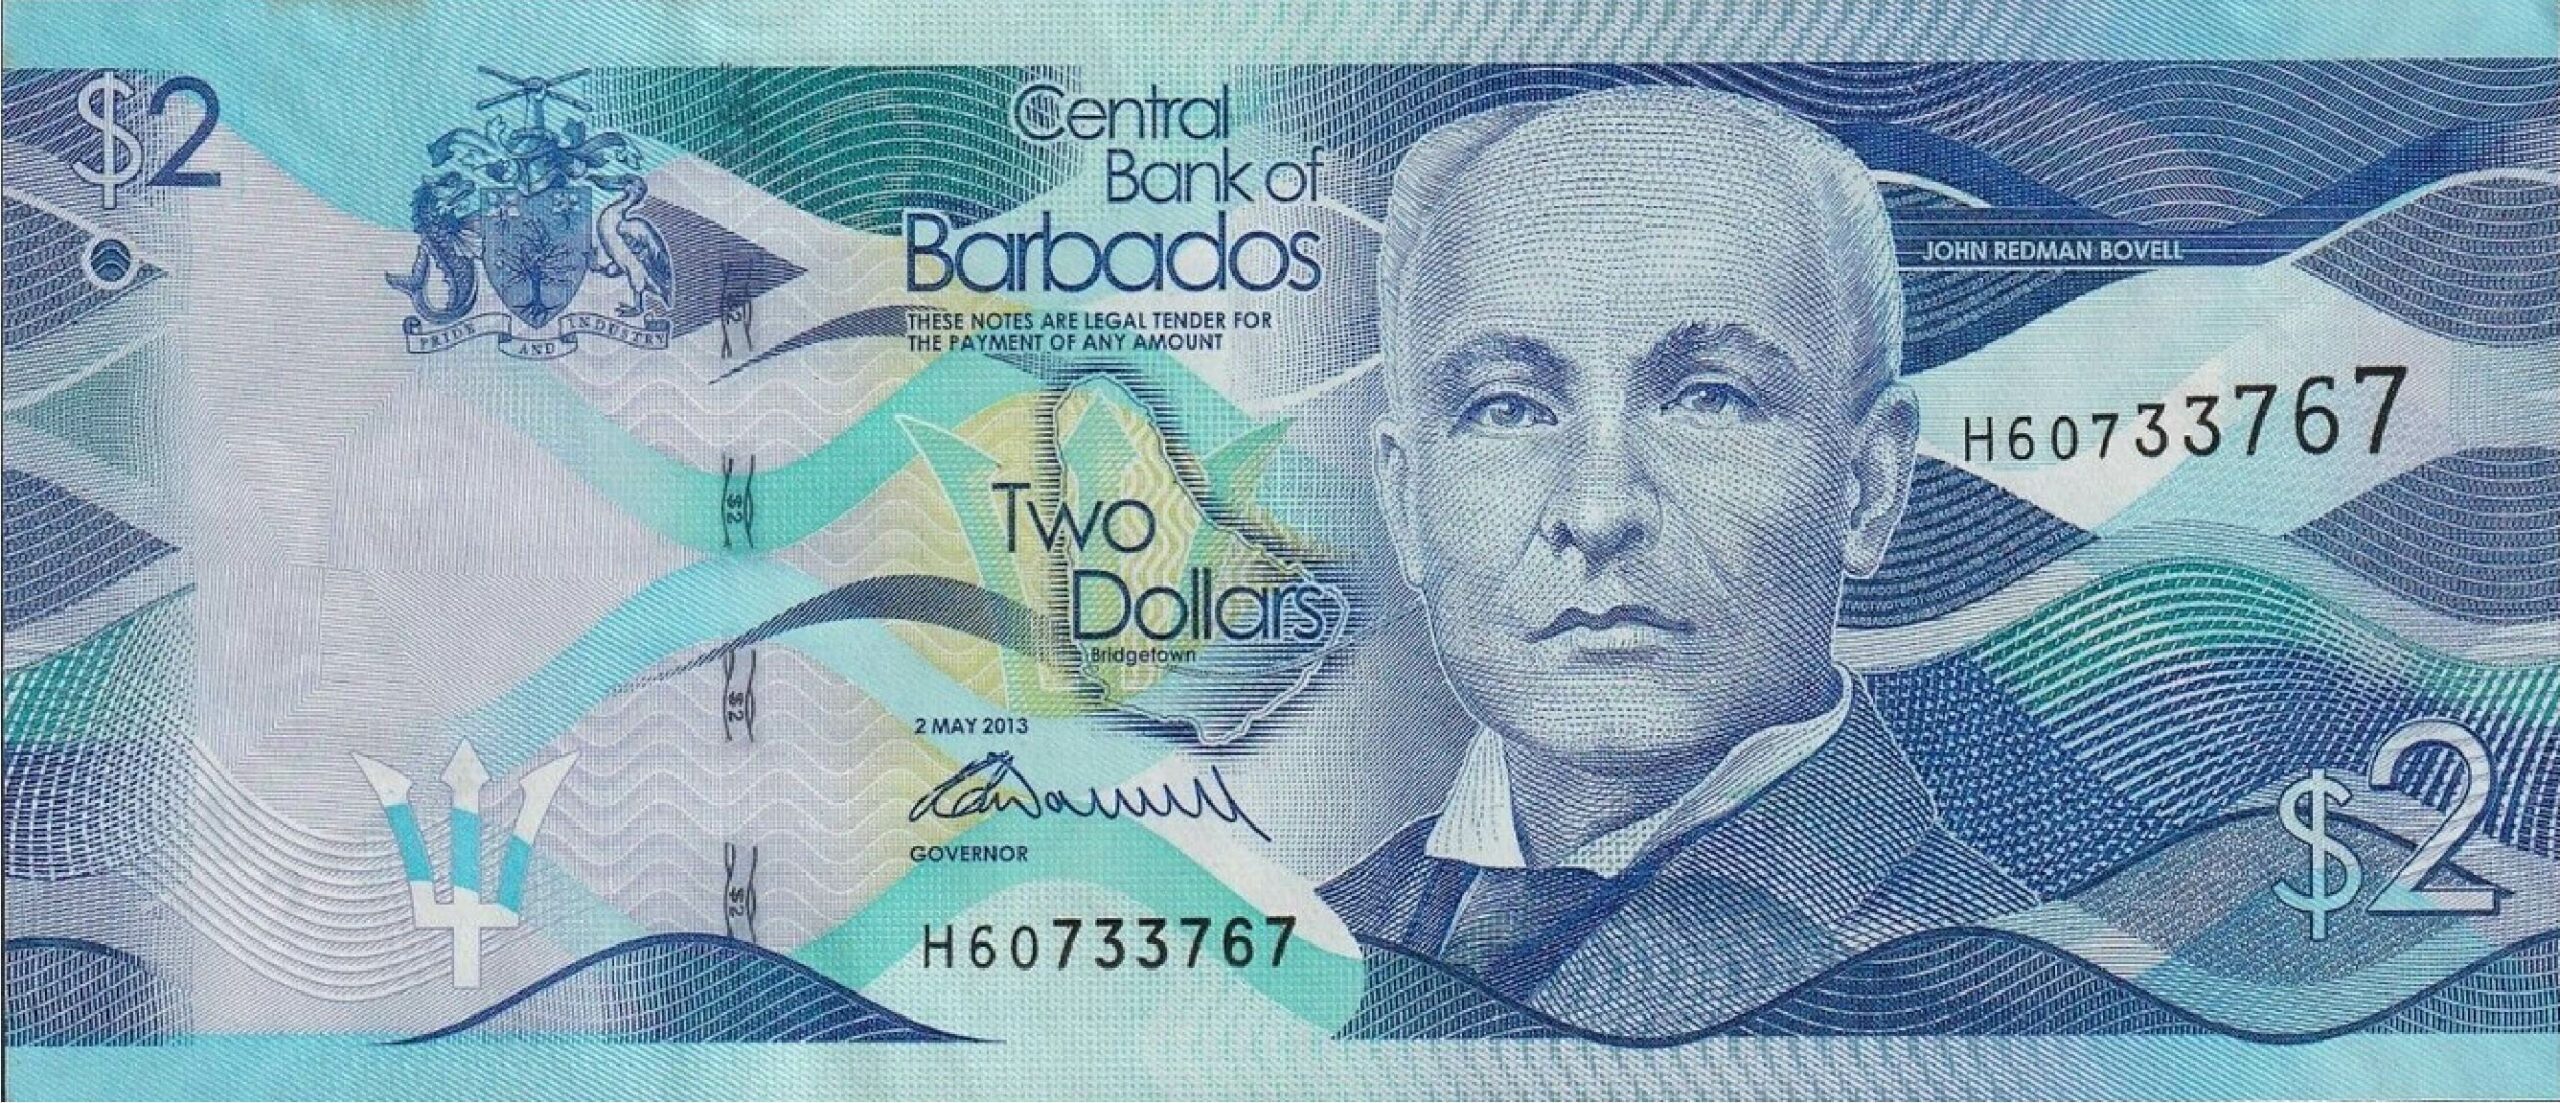 2 Barbados Dollars banknote Morgan Lewis Windmill